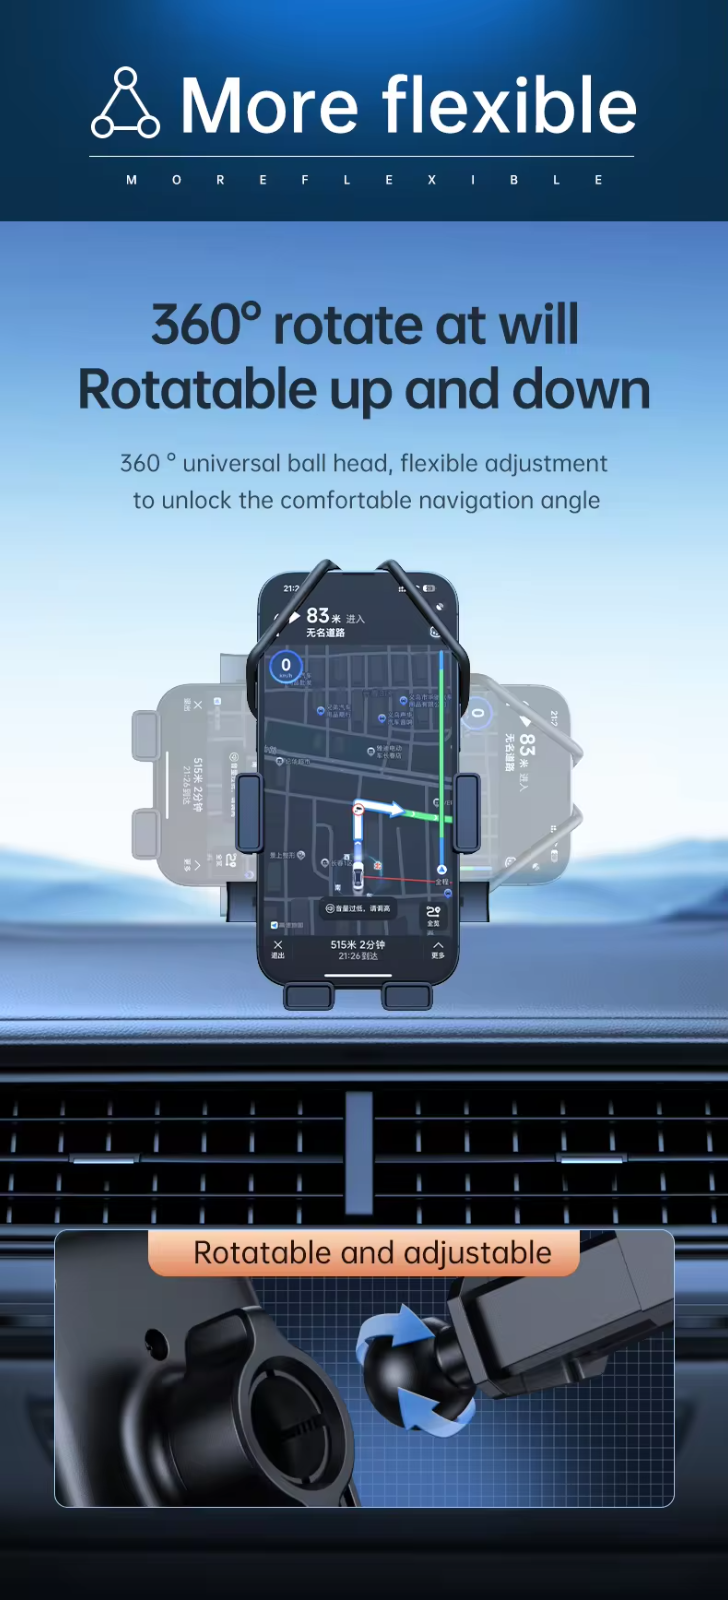 Universal Air Vent Hook Car Holder Mount Stand Bracket Mobile Phone Clip Cradle